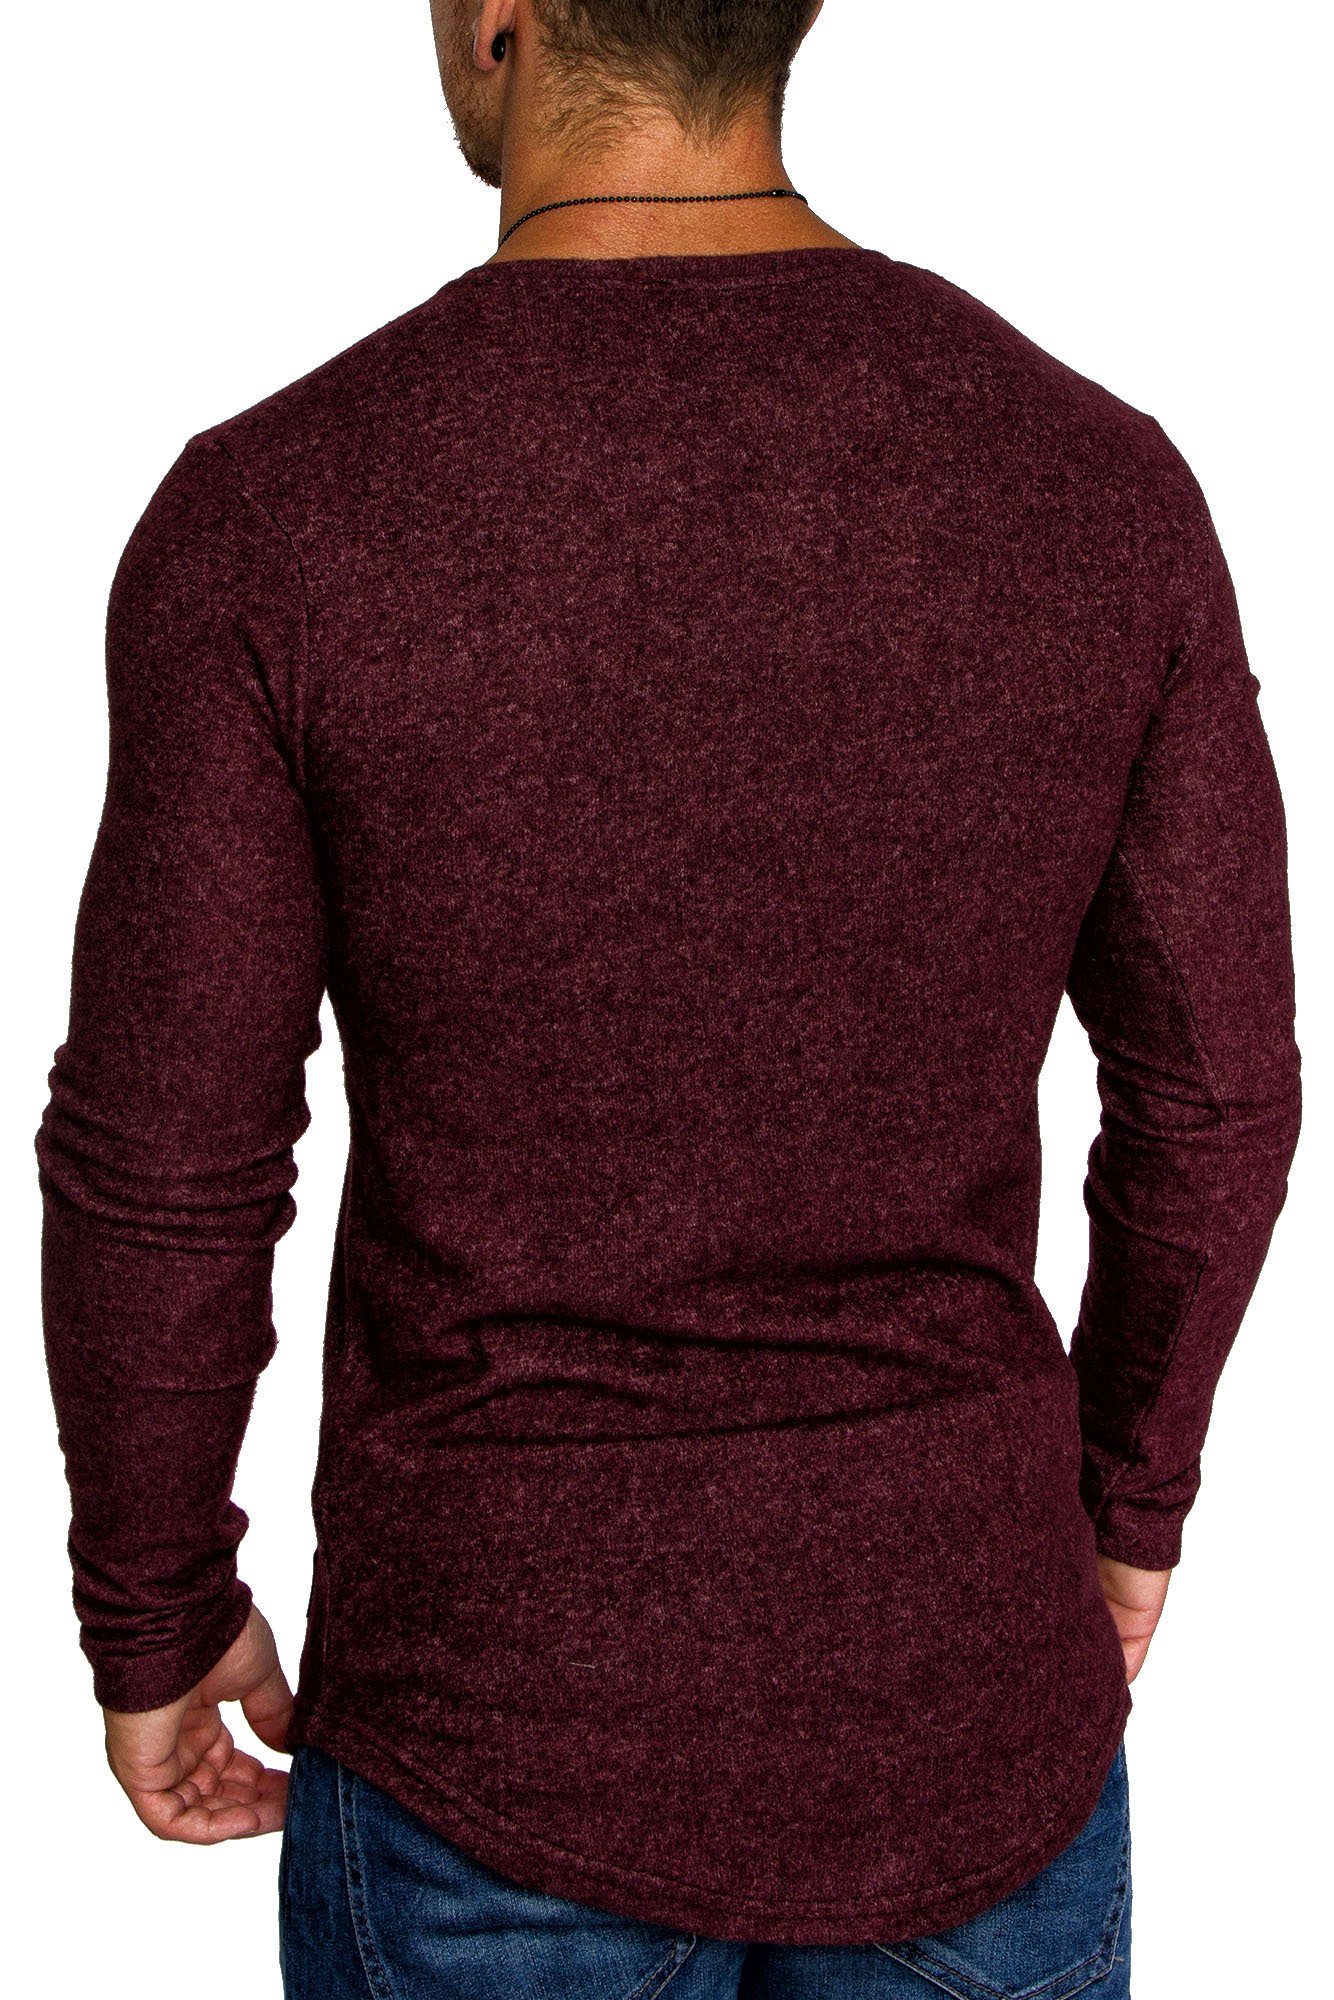 mit Feinstrick Herren Sweatshirt Amaci&Sons Hoodie Oversize Melange Bordeaux V-Ausschnitt Basic Pullover DAVIE Pullover